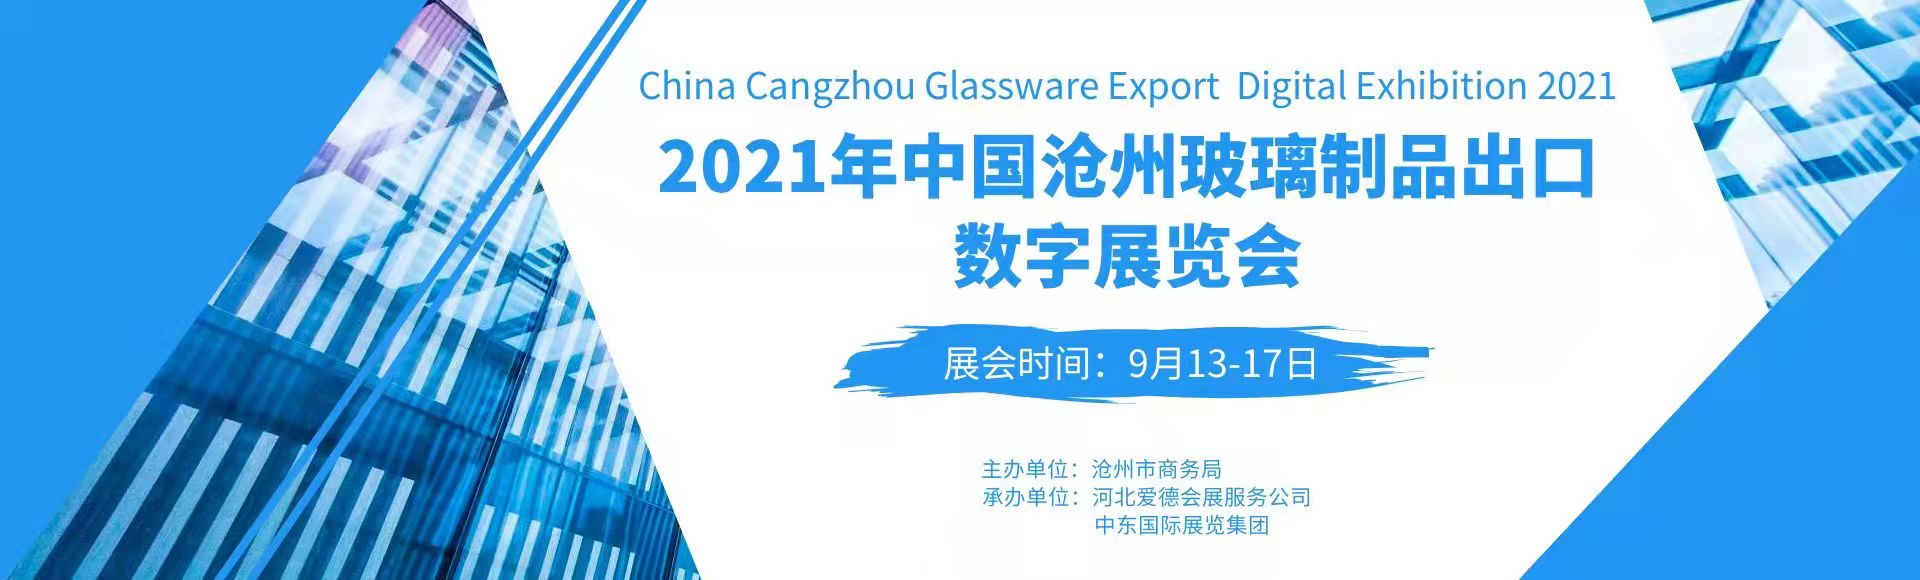 2021年<font color=#ff0000>中国</font>（沧州）玻璃制品出口数字展览会即将开幕